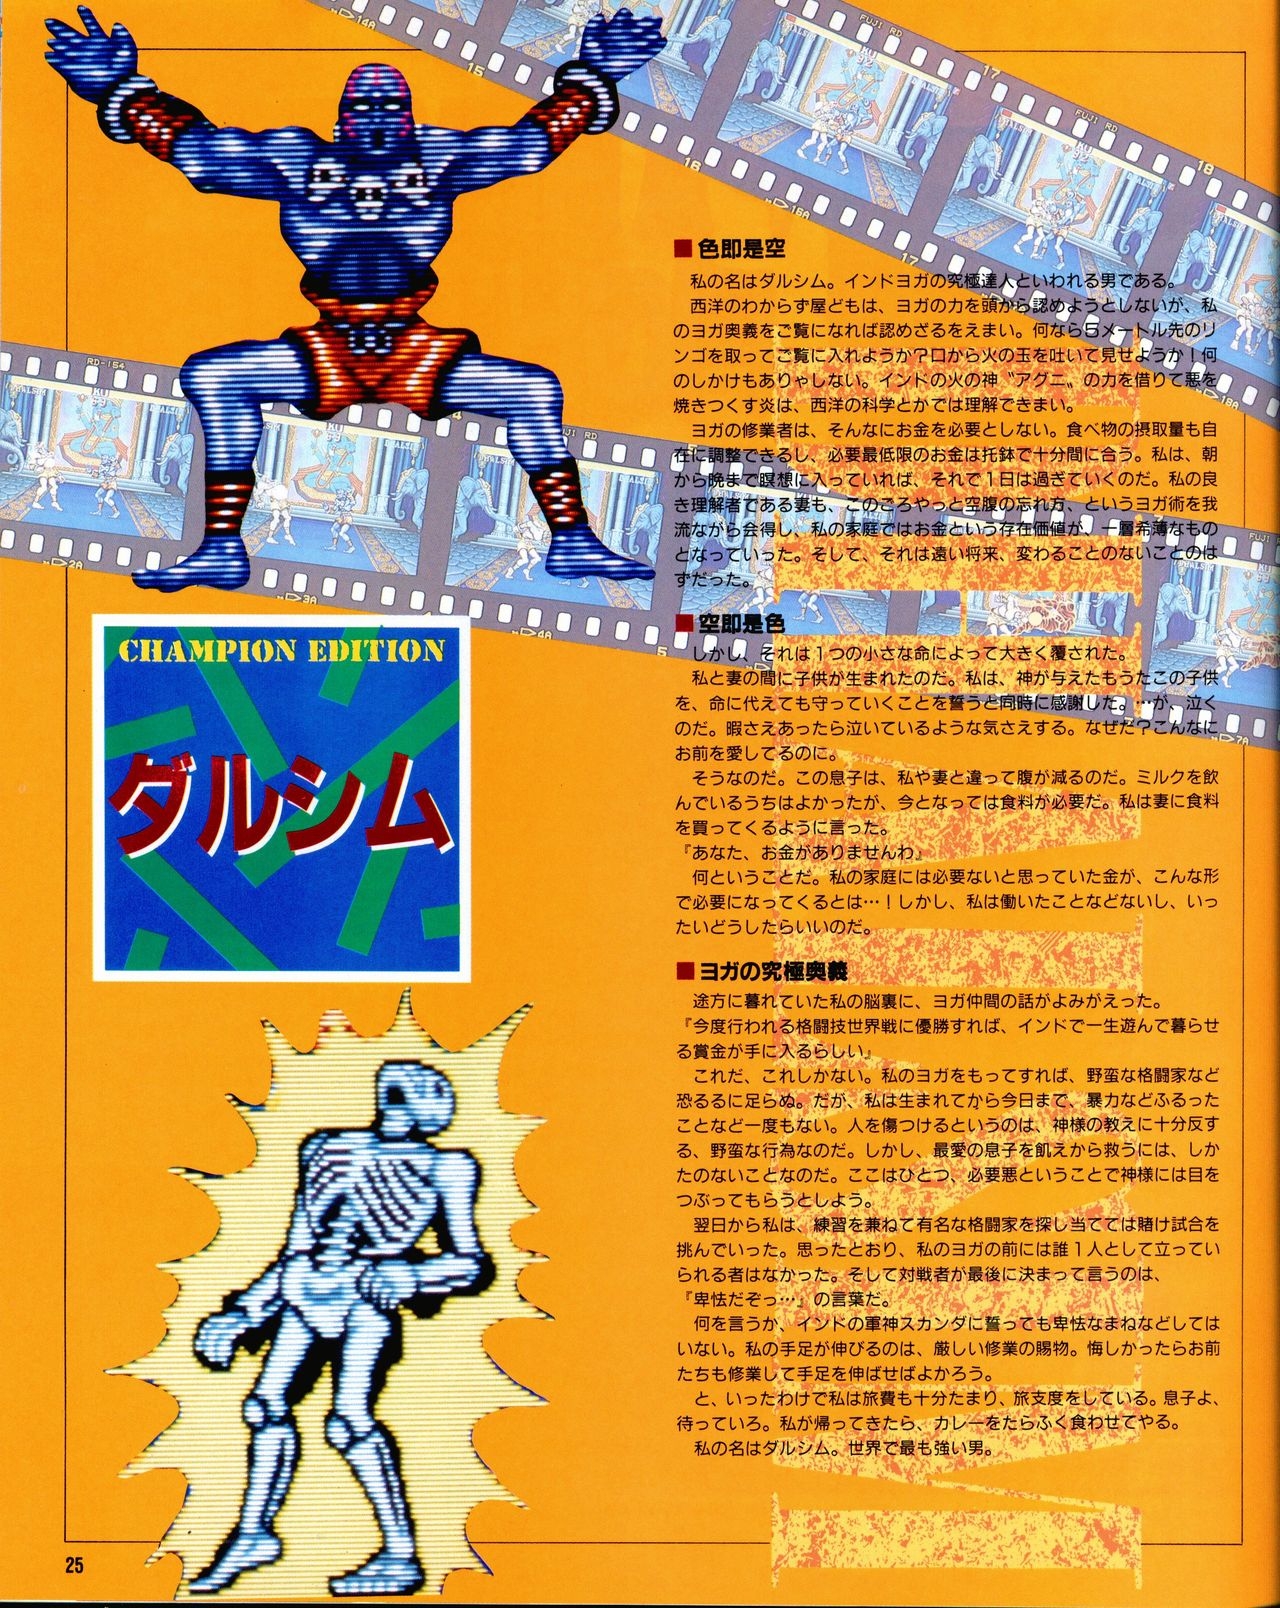 Street Fighter II Dash - Gamest special issue 77 26